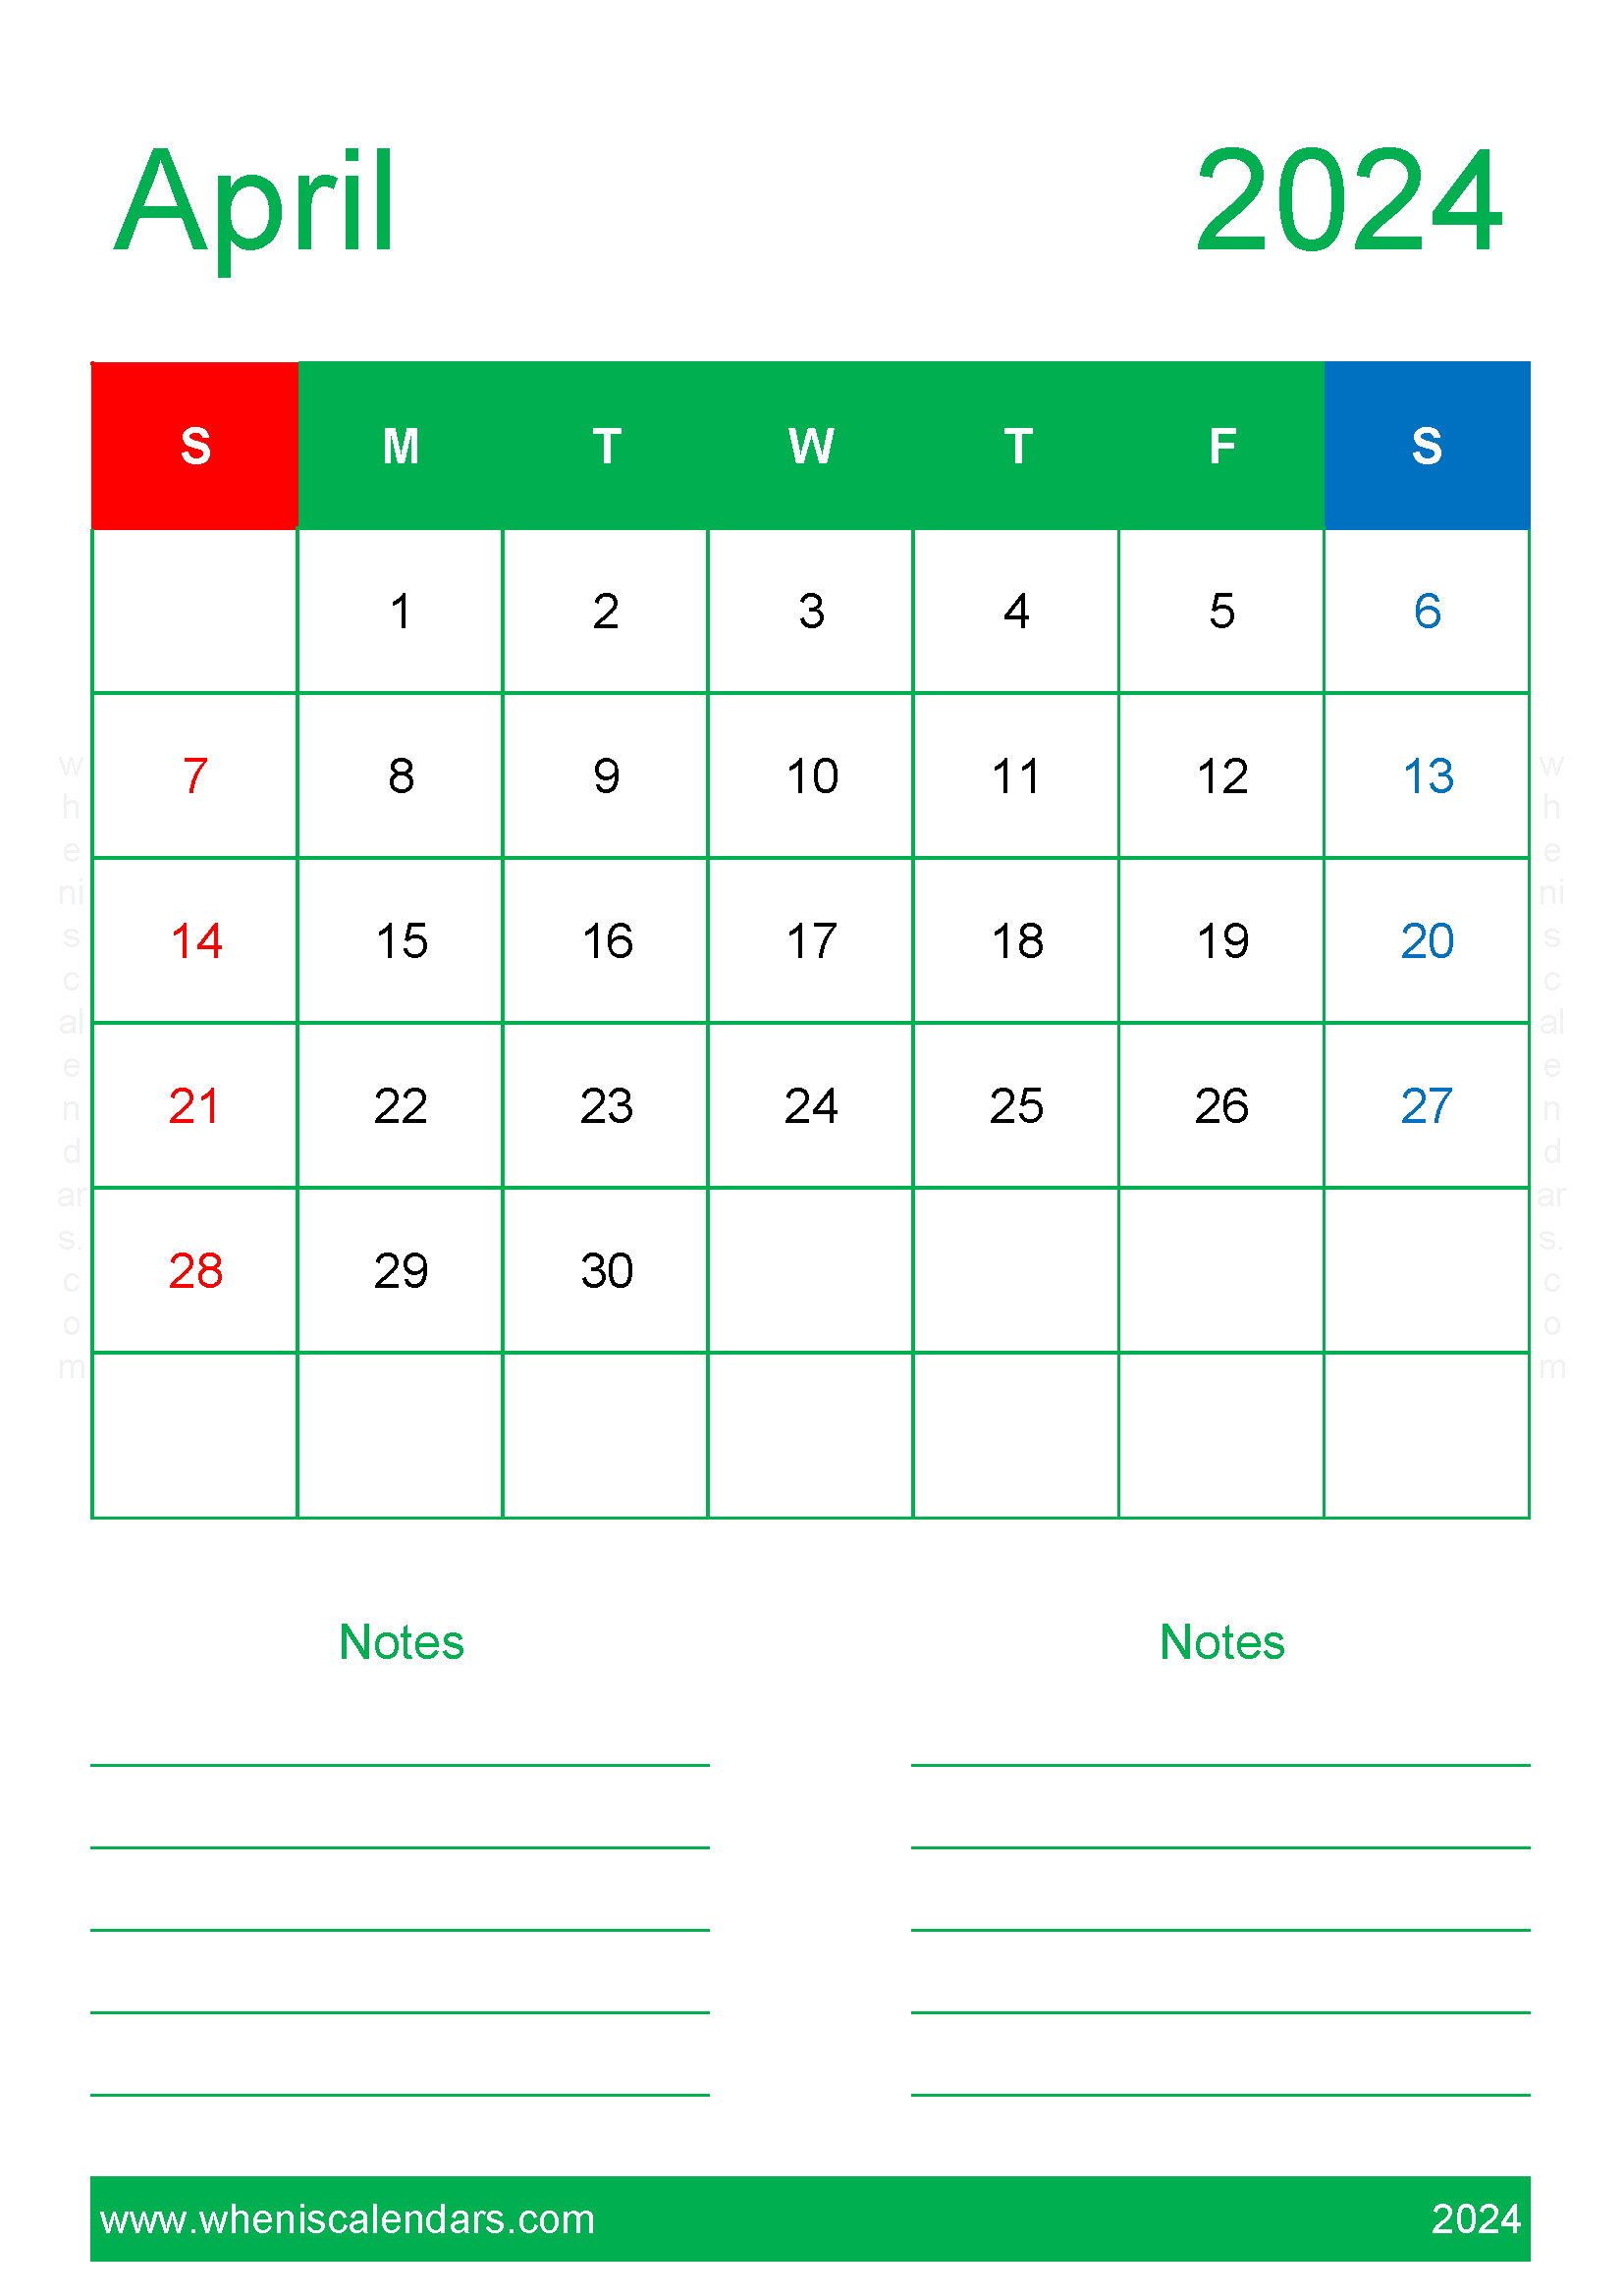 April 2024 planner pdf Monthly Calendar